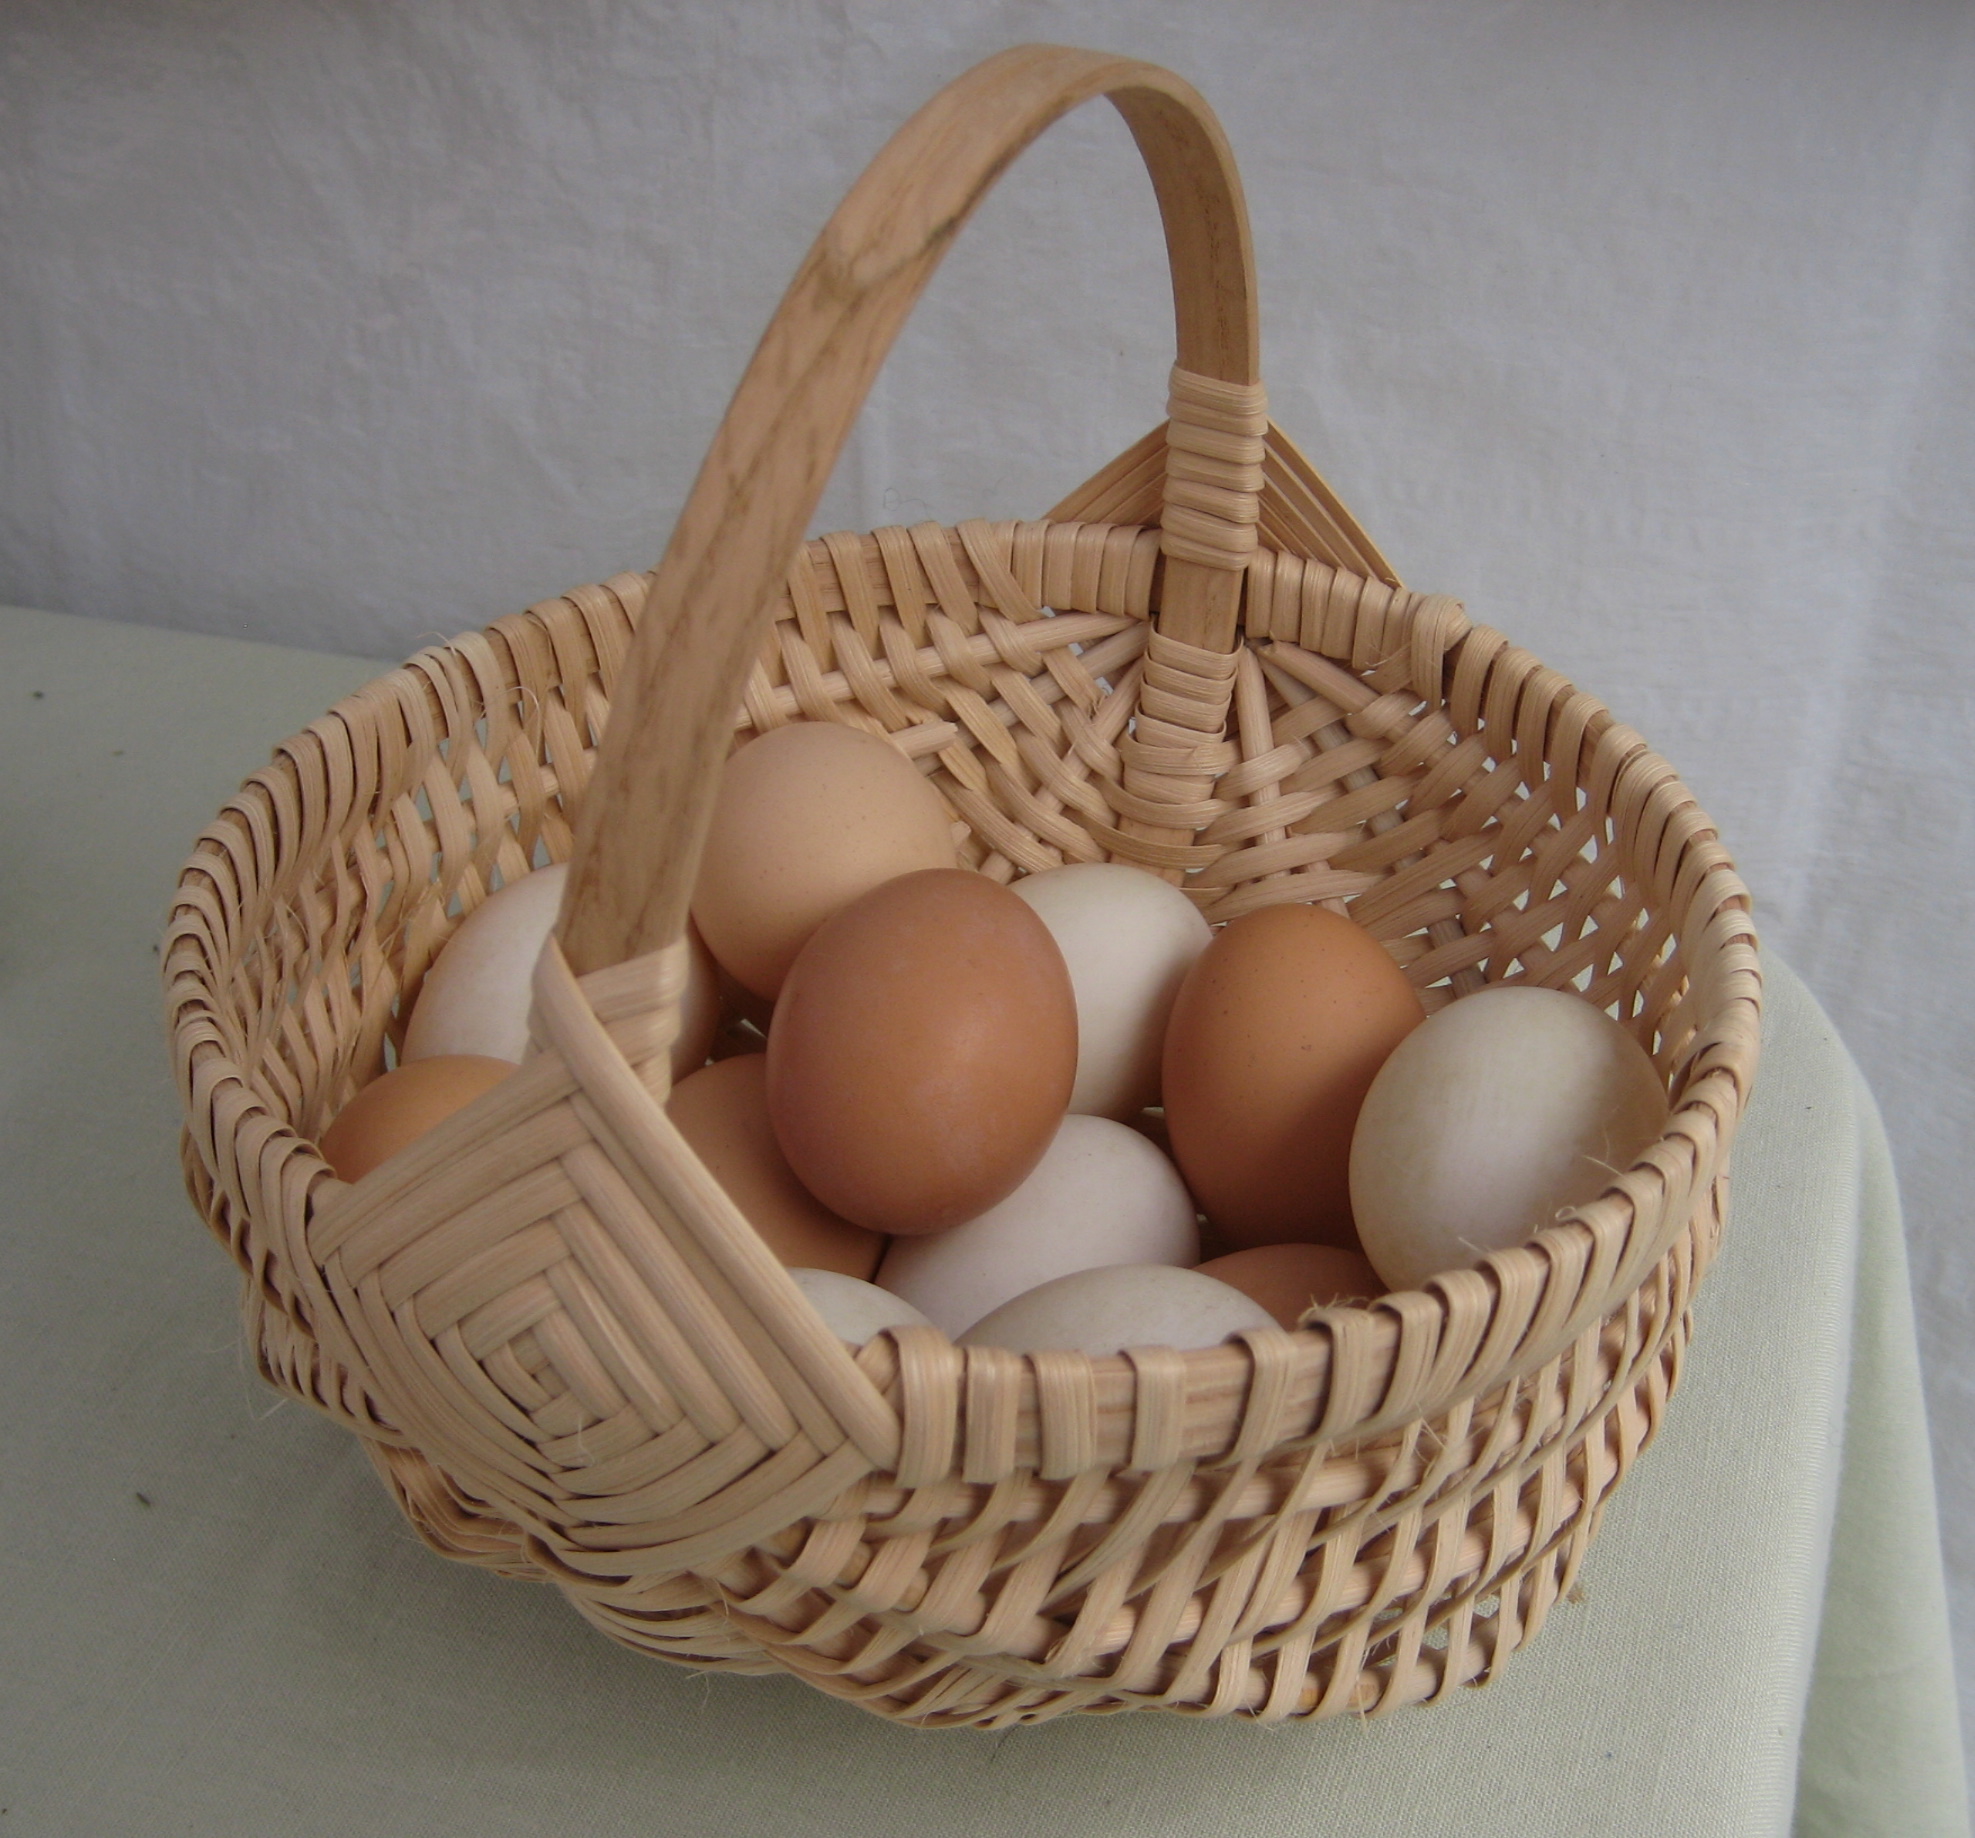 Egg Basket Weaving Class - April 10th, Carnation WA (cascadia forum ...